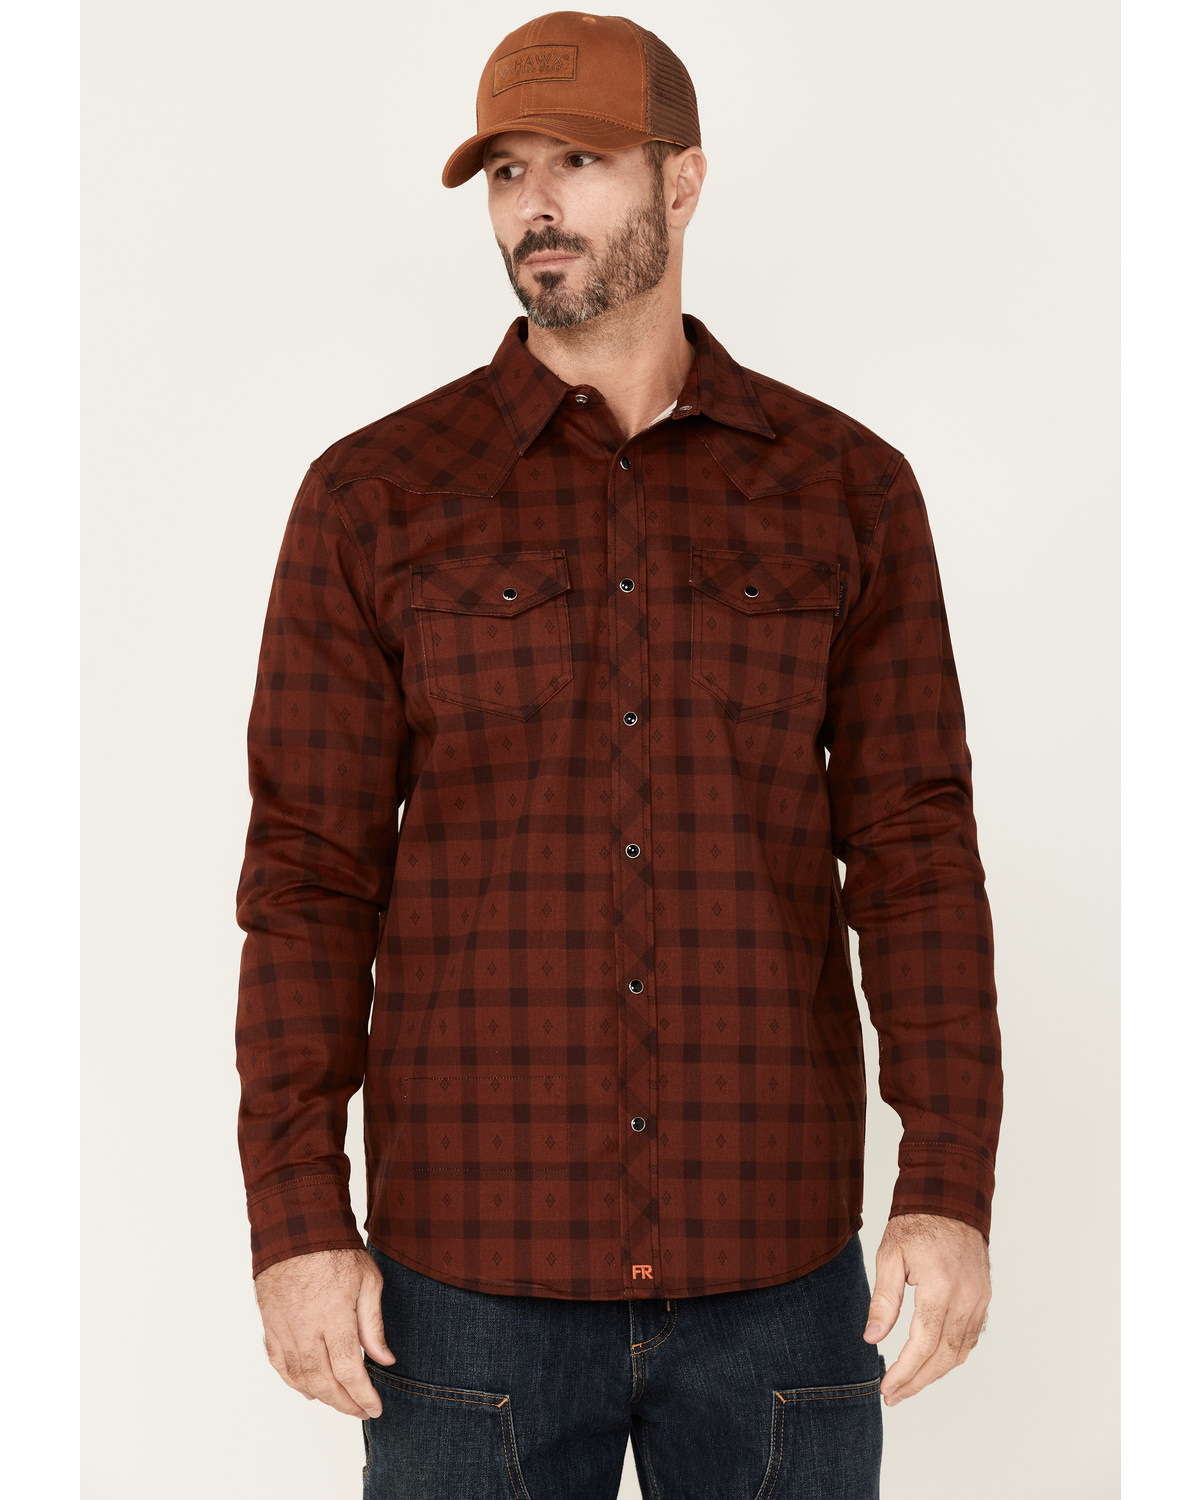 Cody James Men's FR Southwestern Plaid Print Long Sleeve Snap Work Shirt